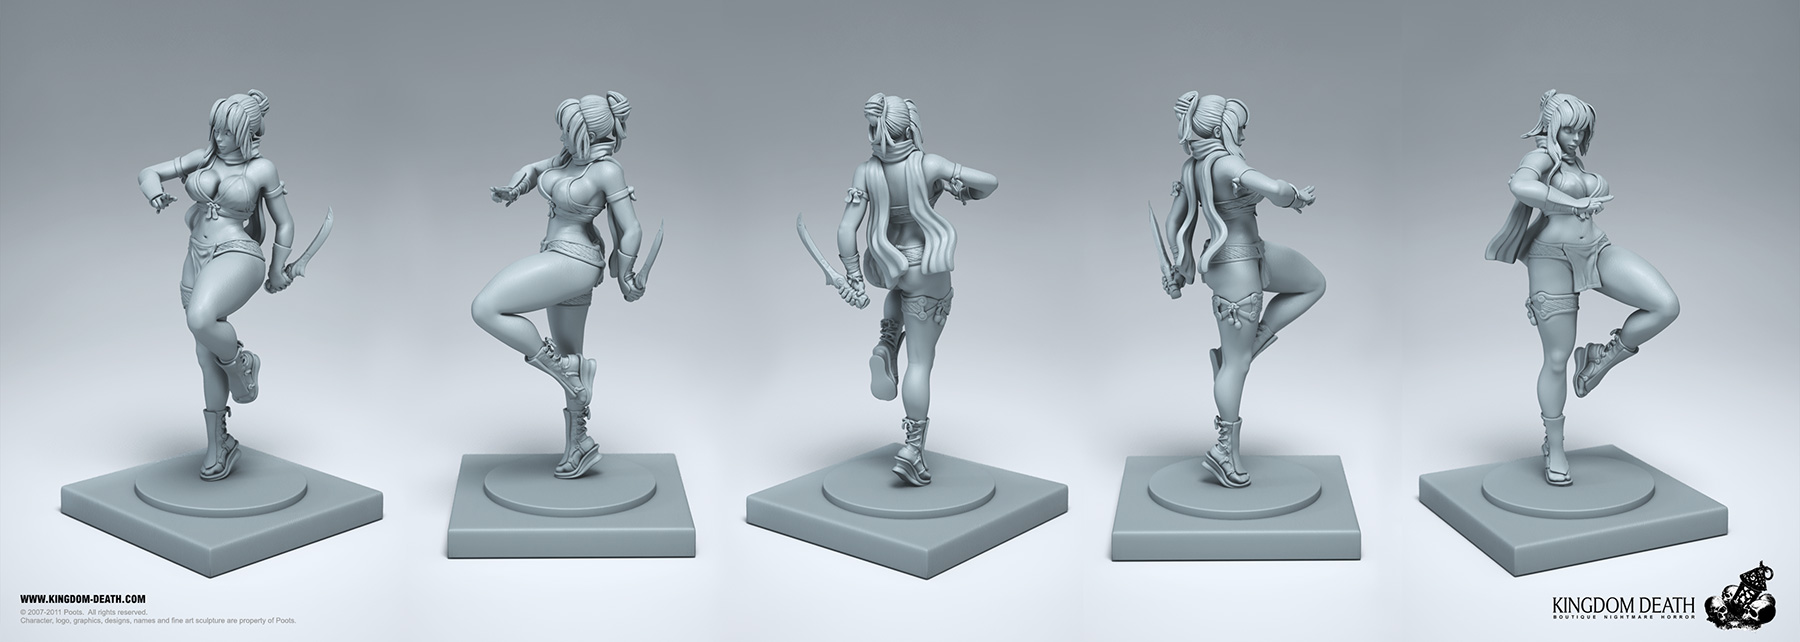 Illuminated Lady model for Kingdom Death Game Resin Figure